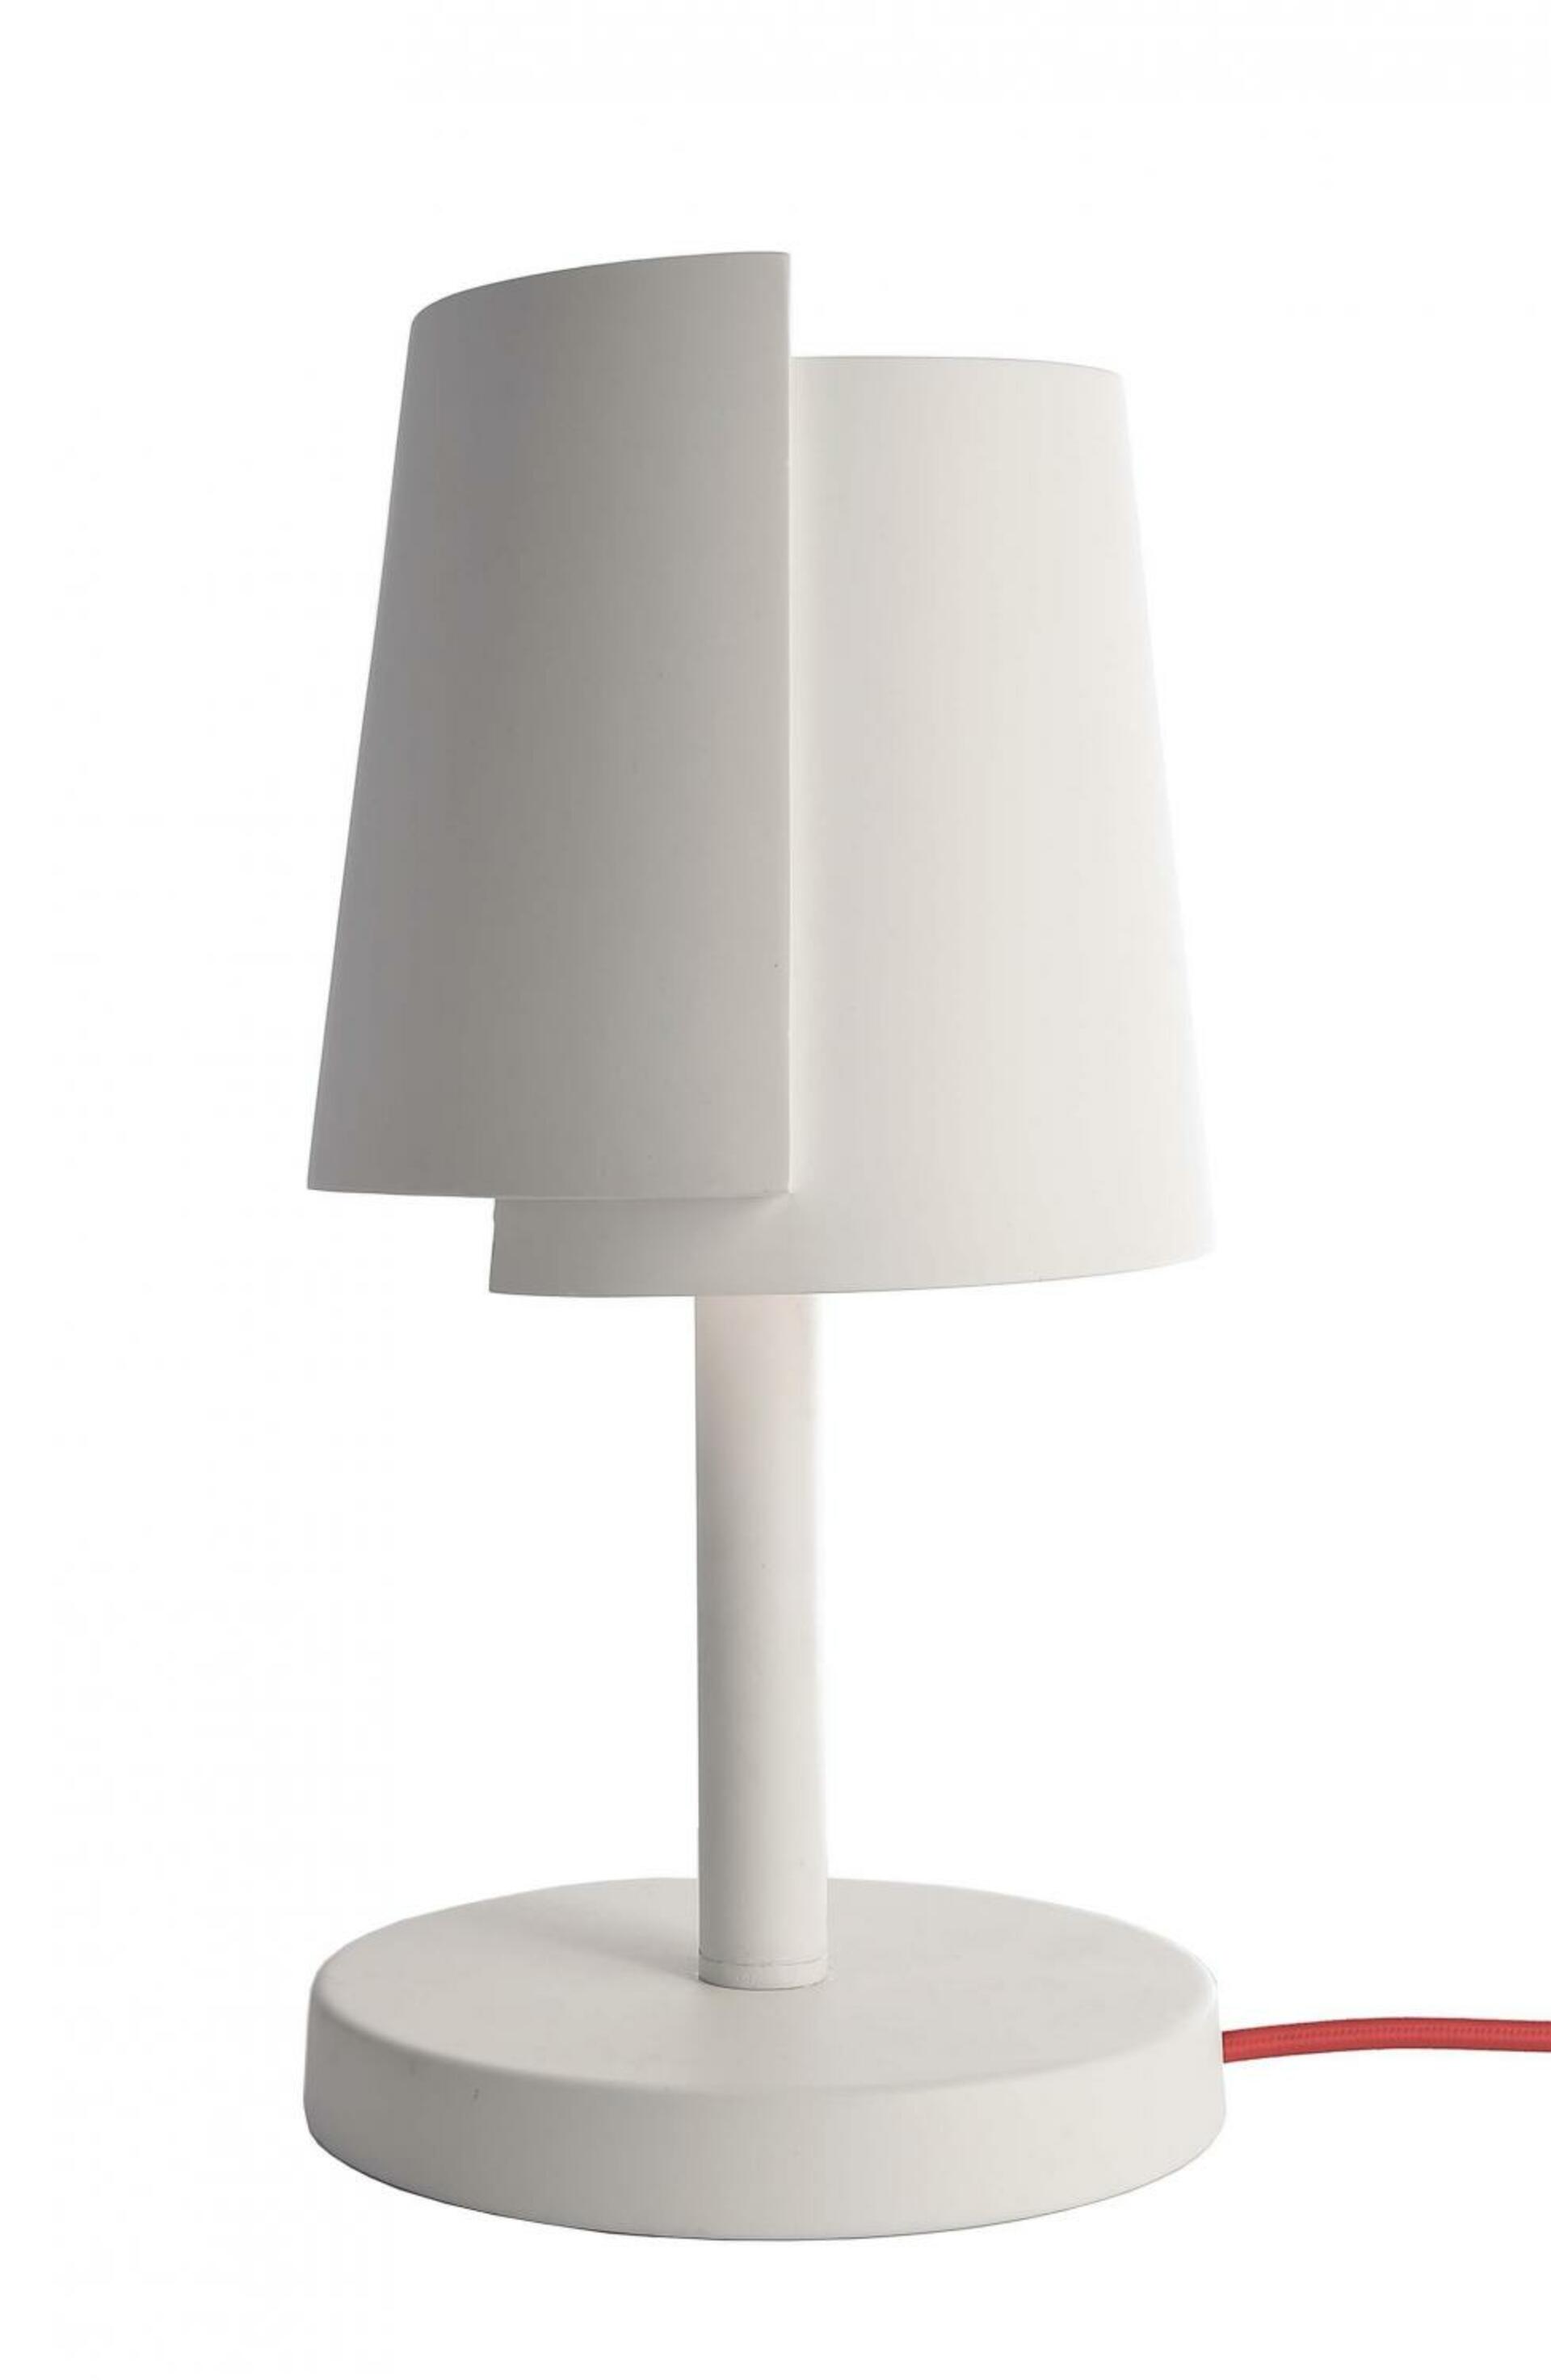 Light Impressions Deko-Light stolní lampa Twister 220-240V AC/50-60Hz G9 1x max. 25,00 W bílá 346010